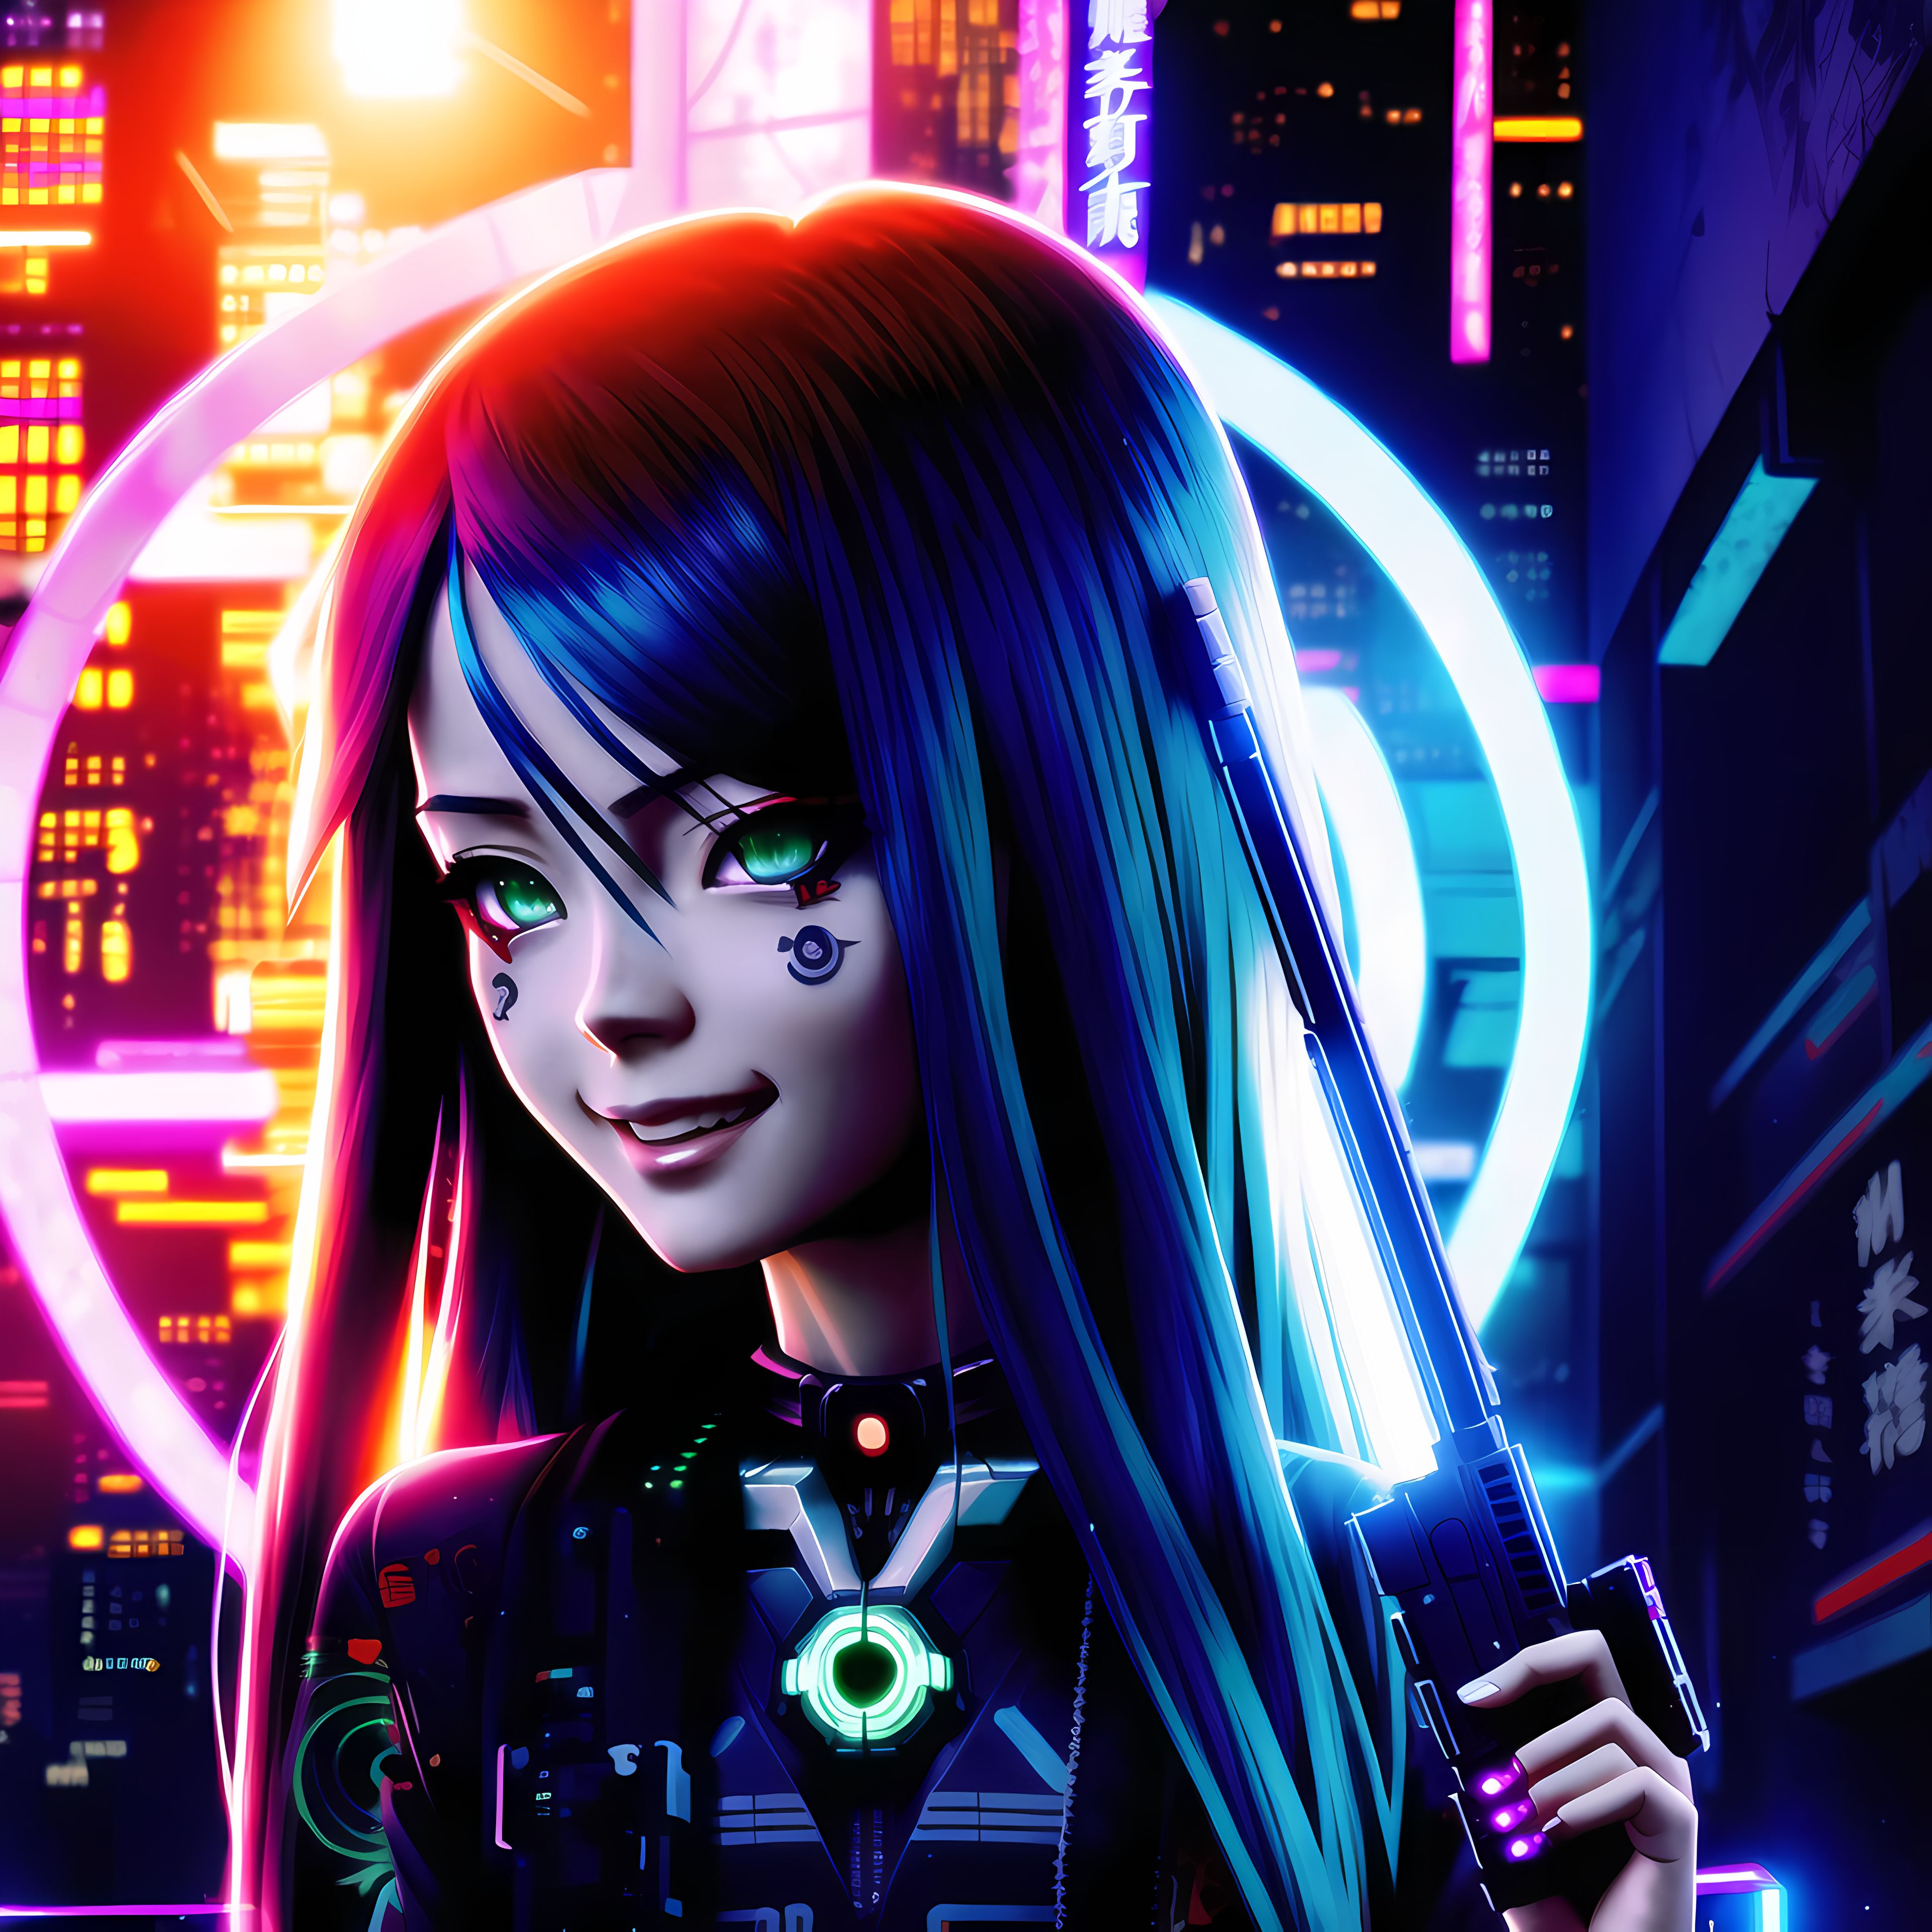 Anime-Cyberpunk-Girl-iPhone-Wallpaper-HD by 9U6ININ on DeviantArt